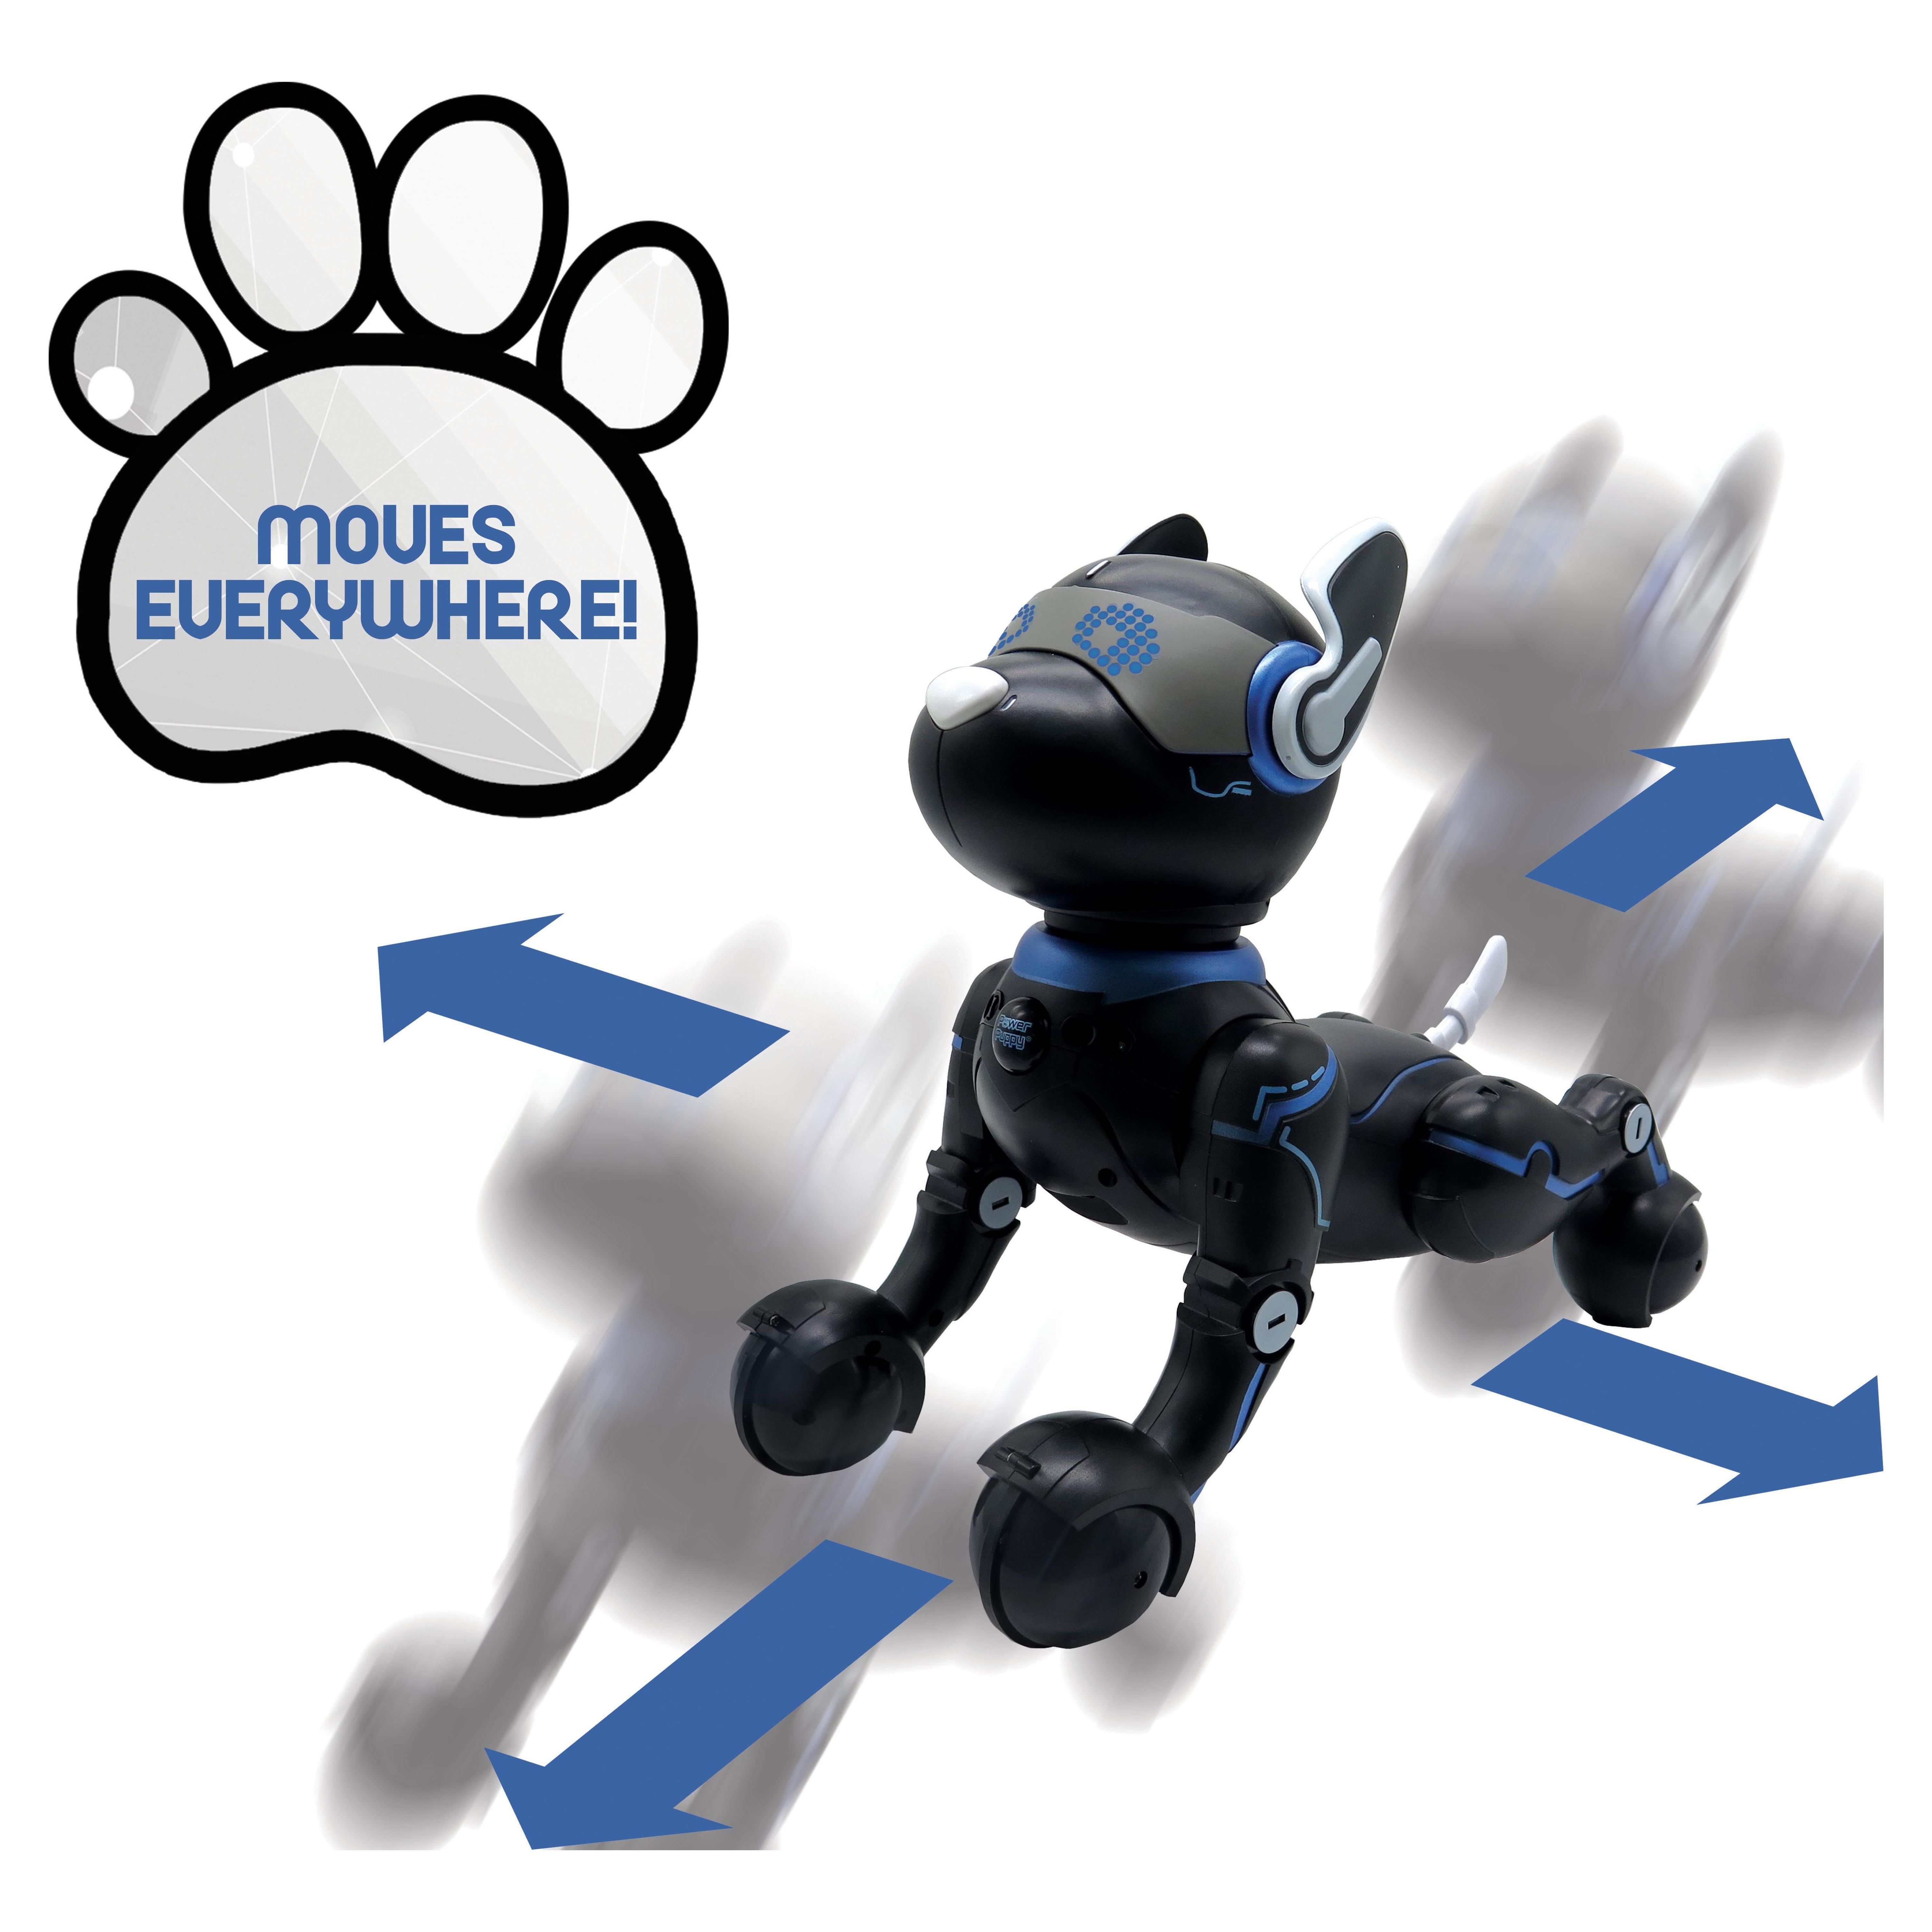 Power puppy - mon chien robot savant programmable